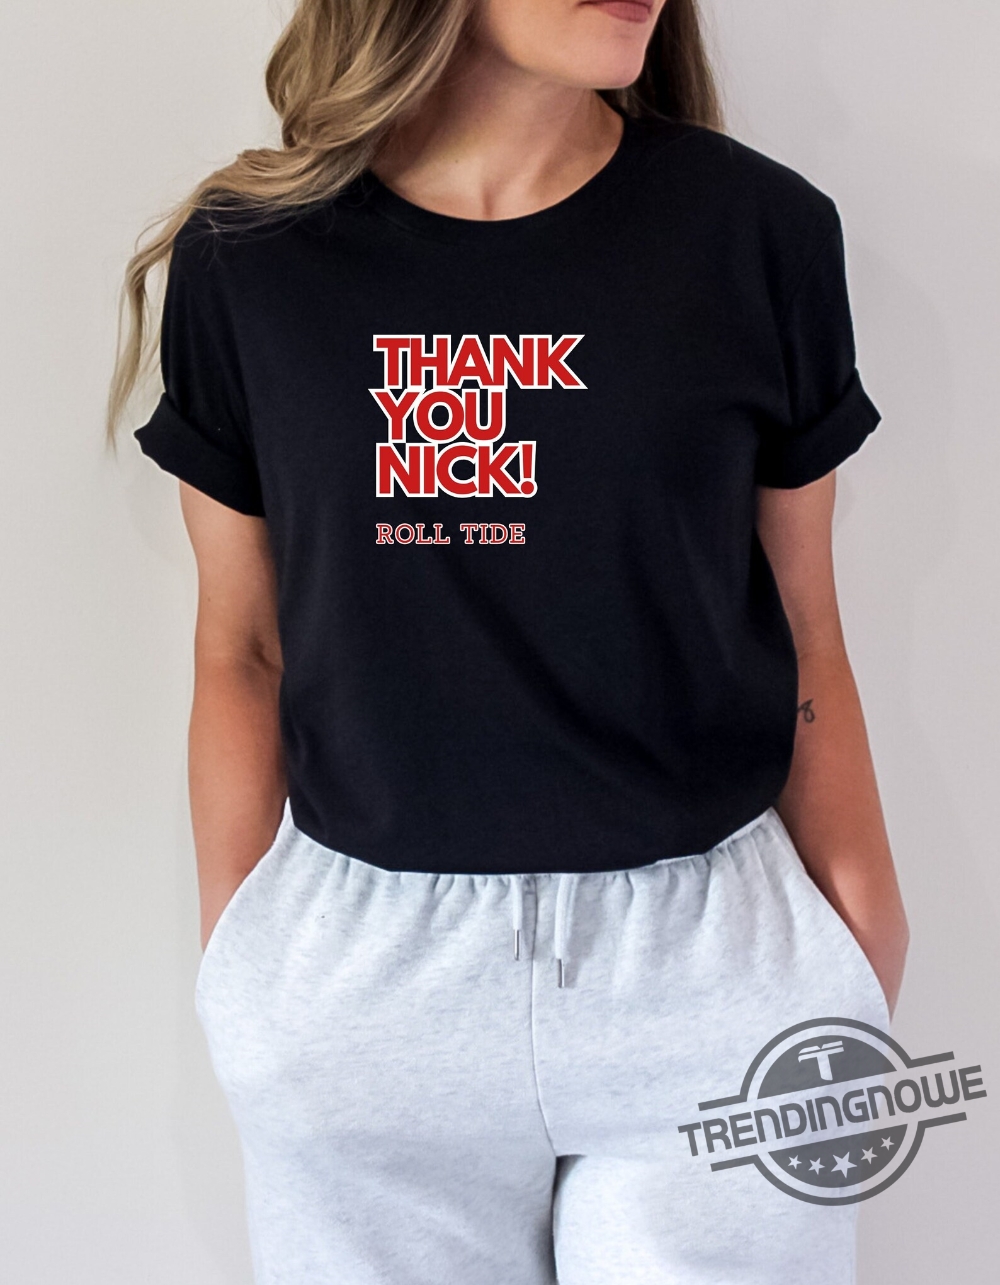 Alabama Nick Saban Retires Shirt Thank You Nick T Shirt Roll Tide Sweatshirt Nick Saban Shirt Gift For Sport Lovers Men And Women